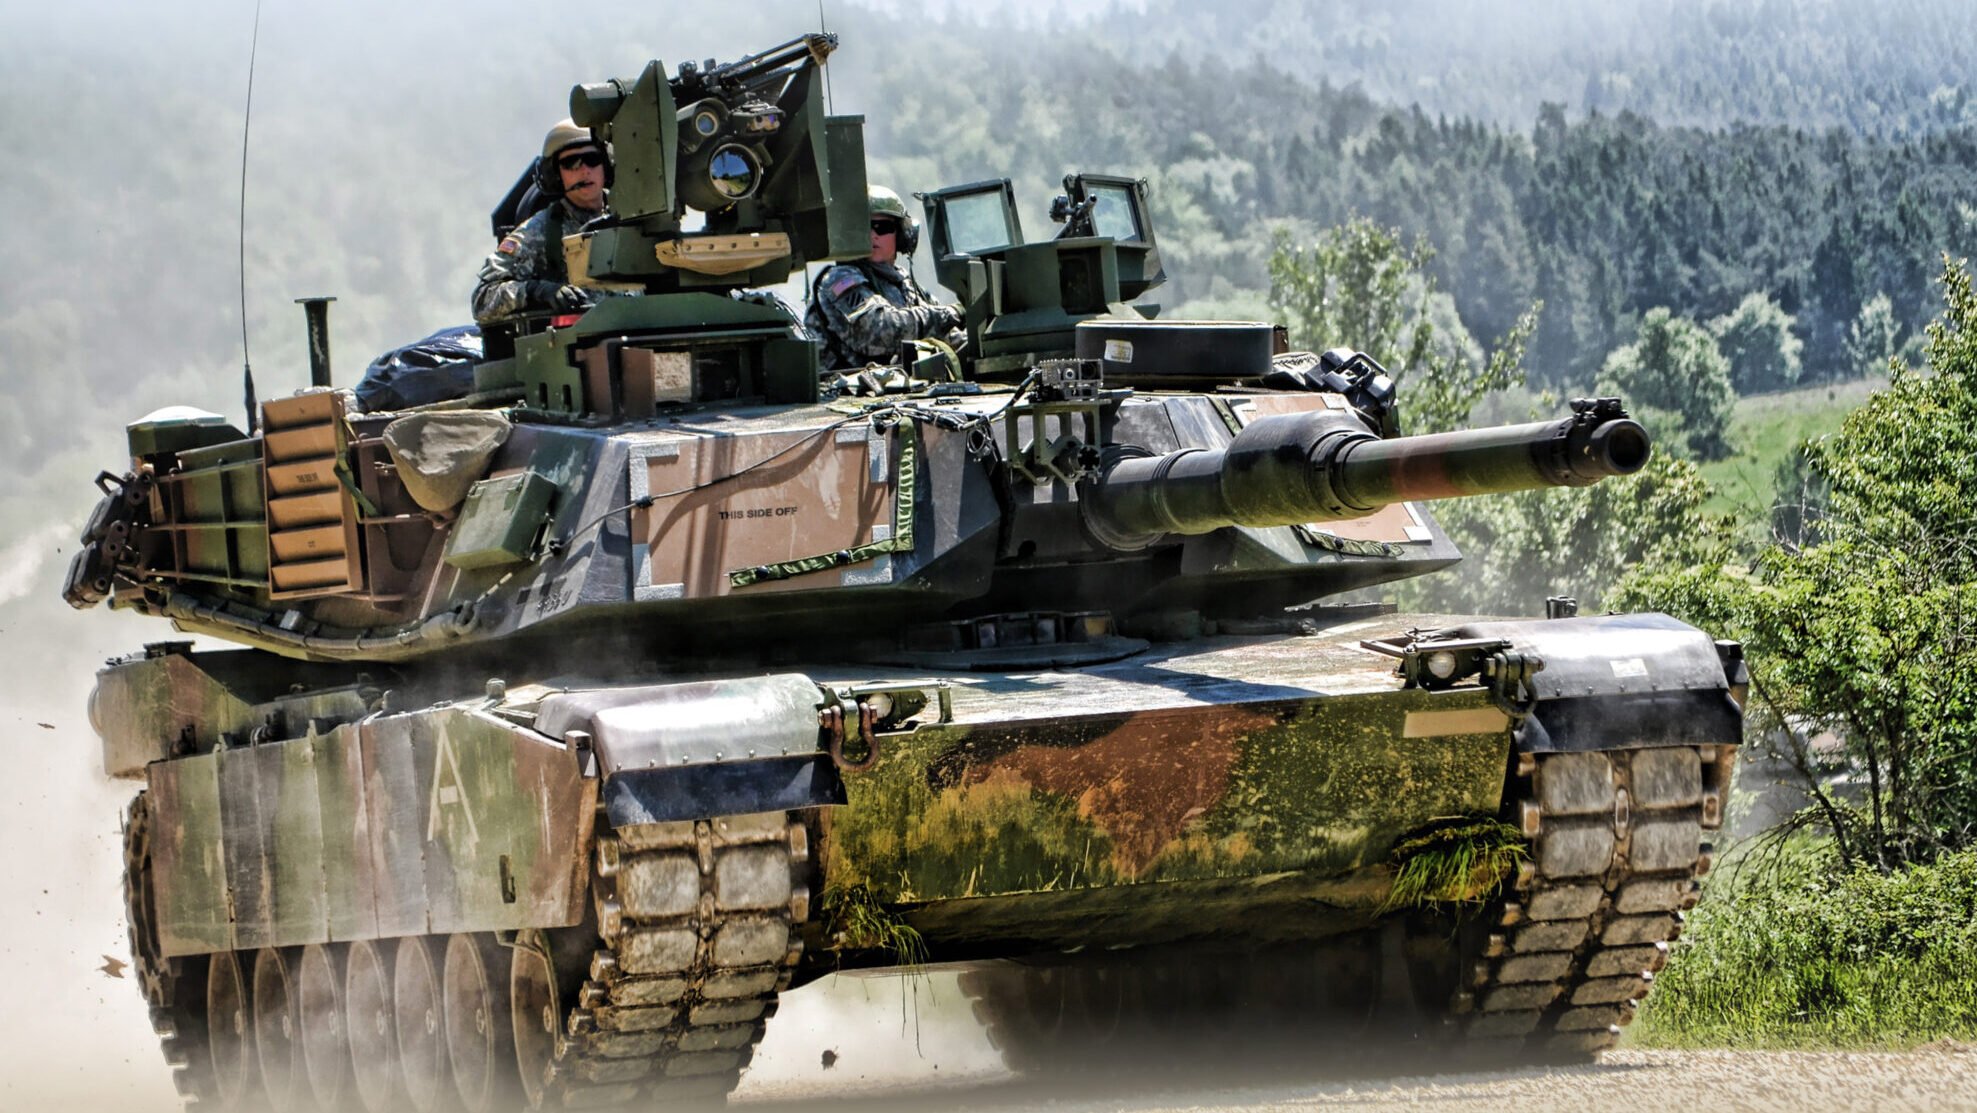 Poland to receive 250 advanced Abrams tanks under $1 billion contract - Breaking Defense